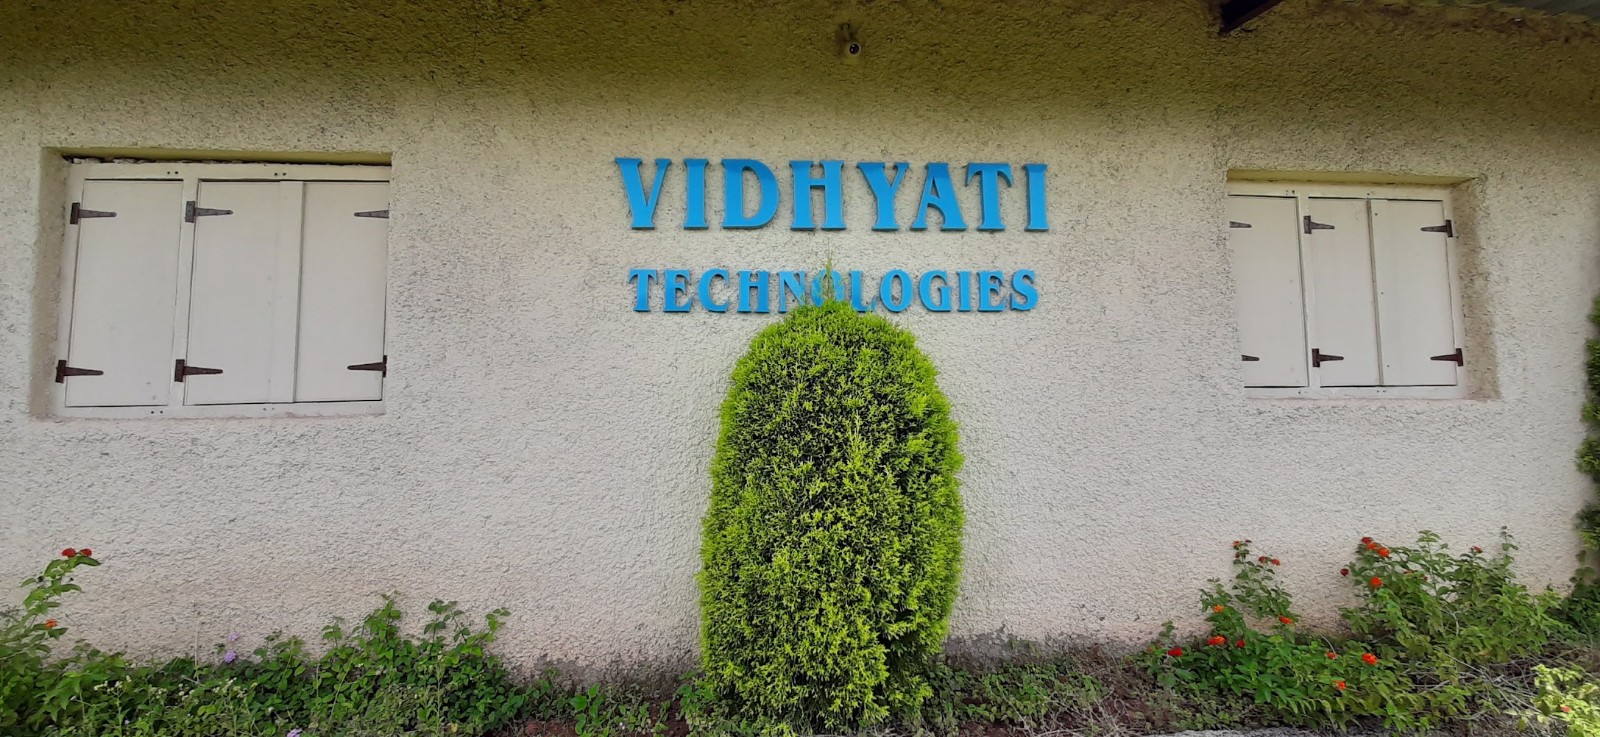 Vidhyati Technology